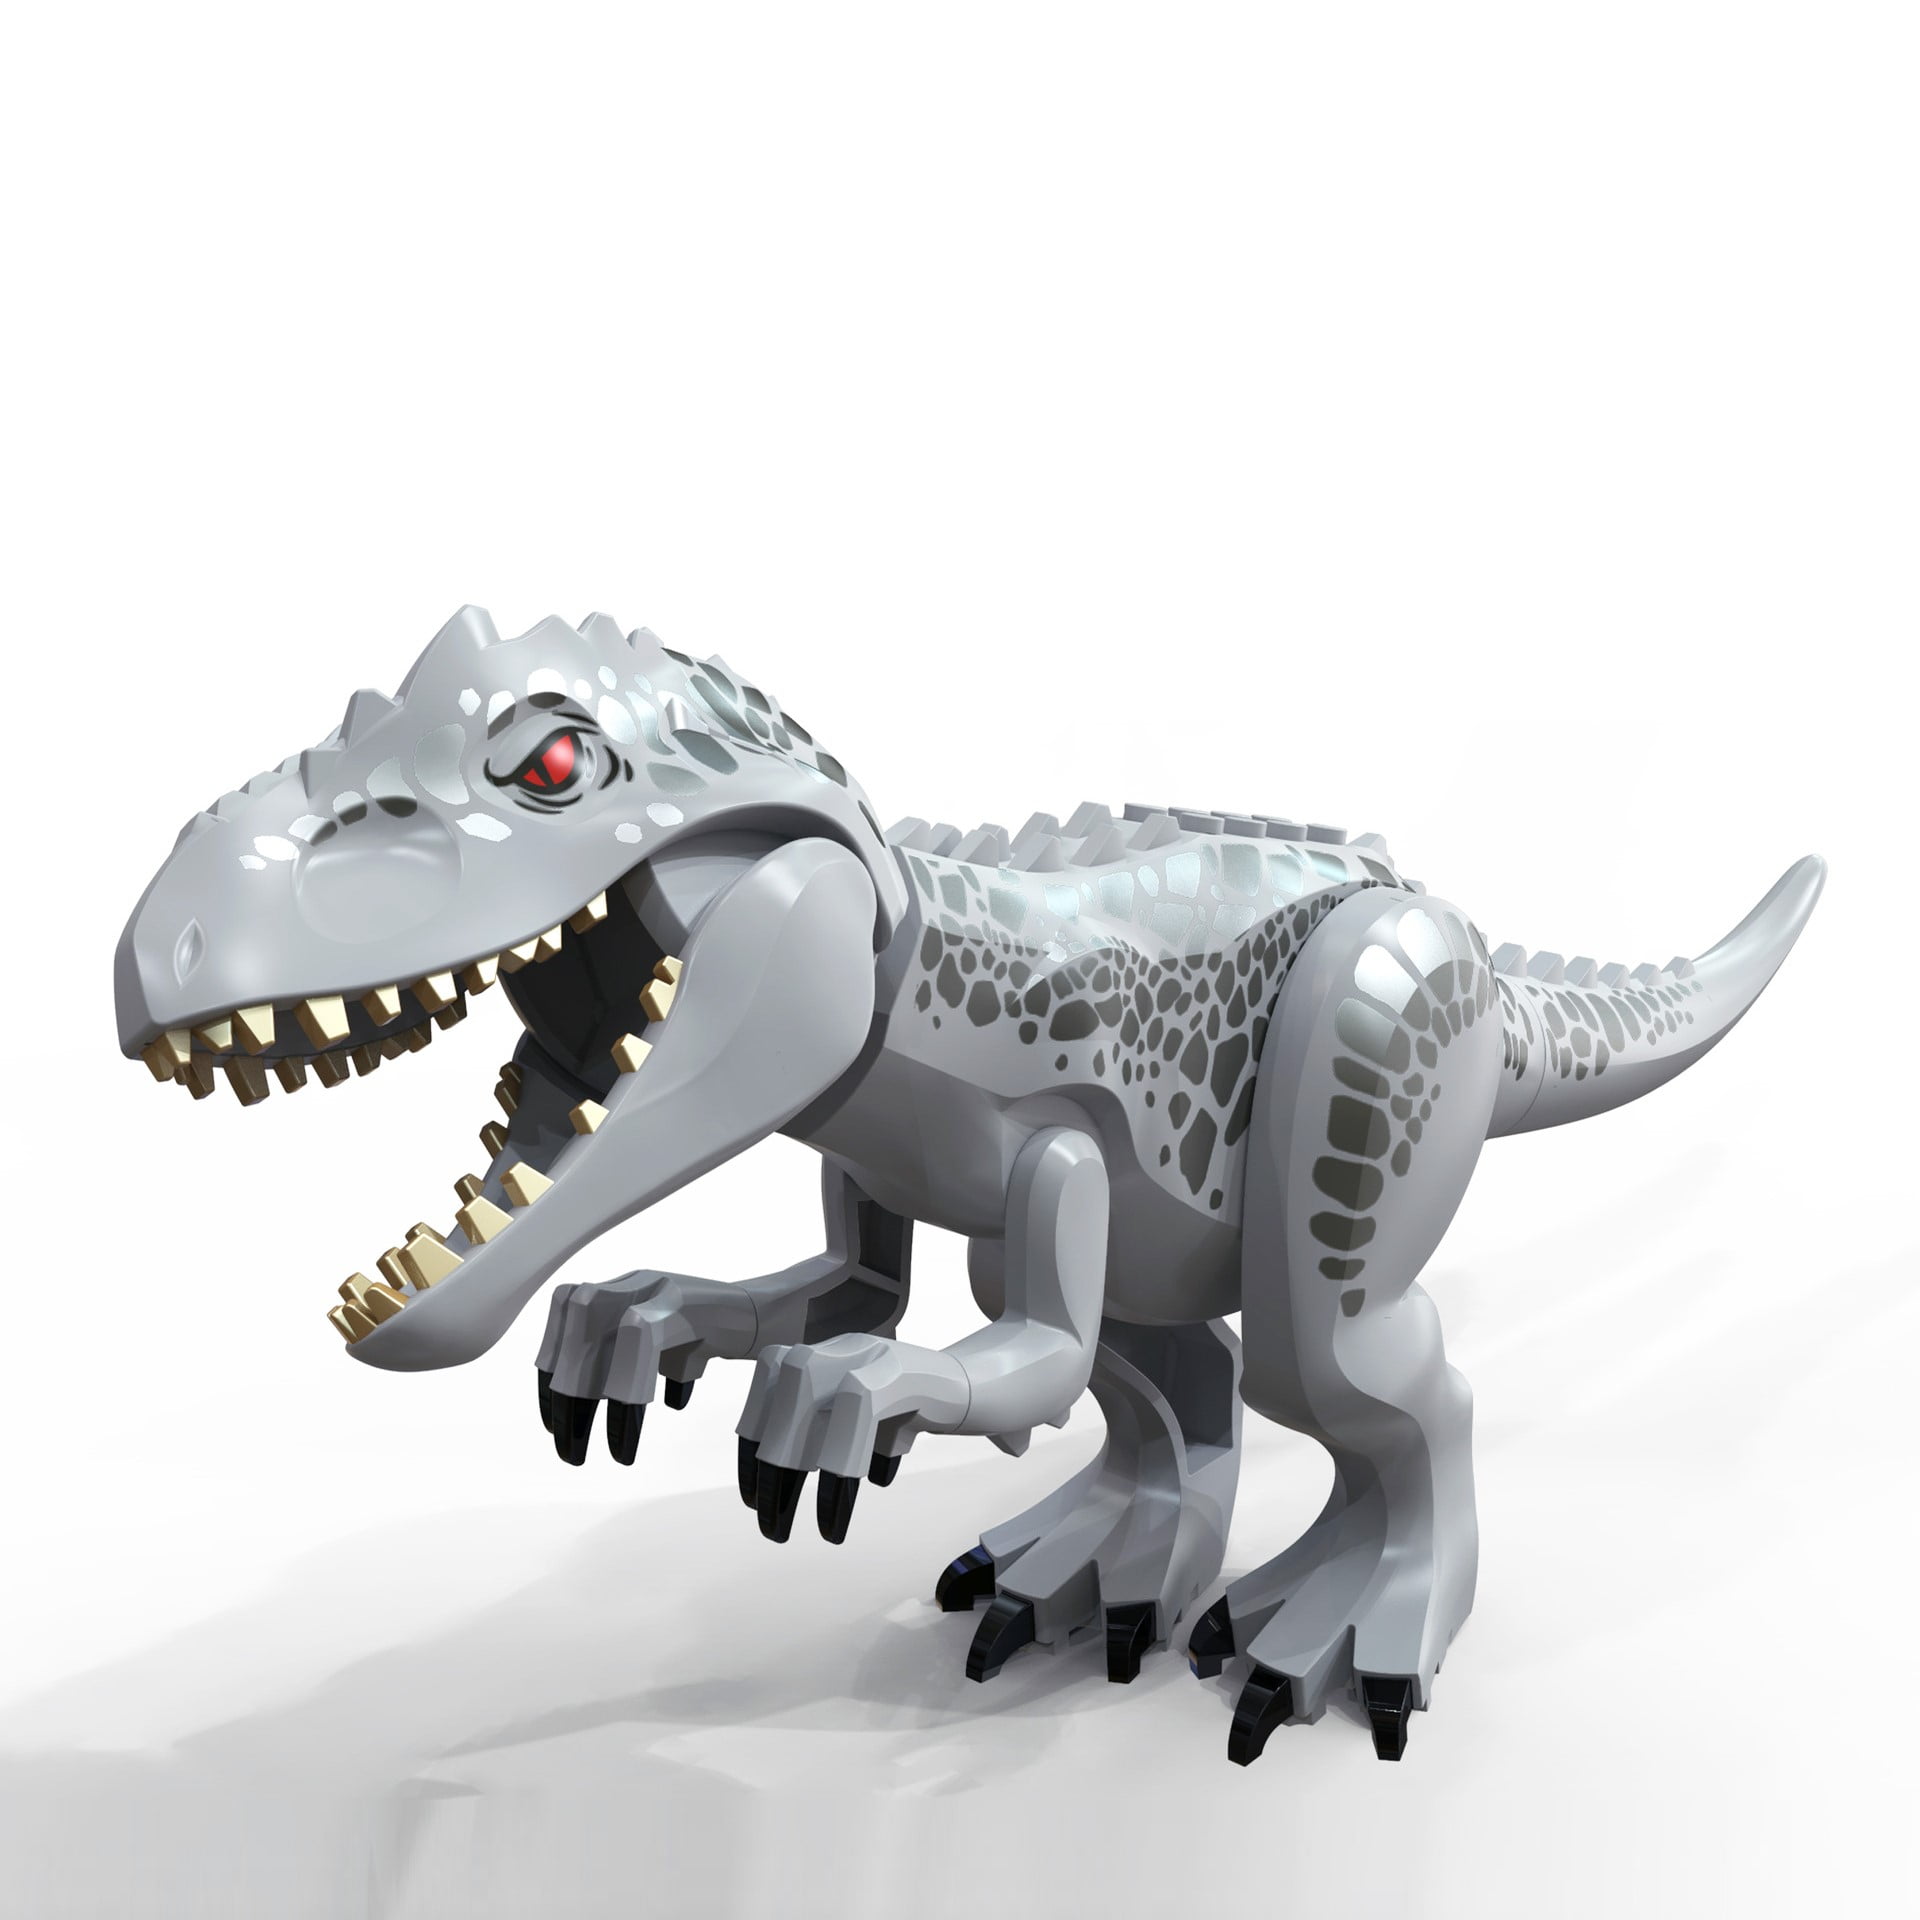 Rex Large Full Size Indominus Dinosaur Figure Building Blocks Fit Lego Toys Sets 